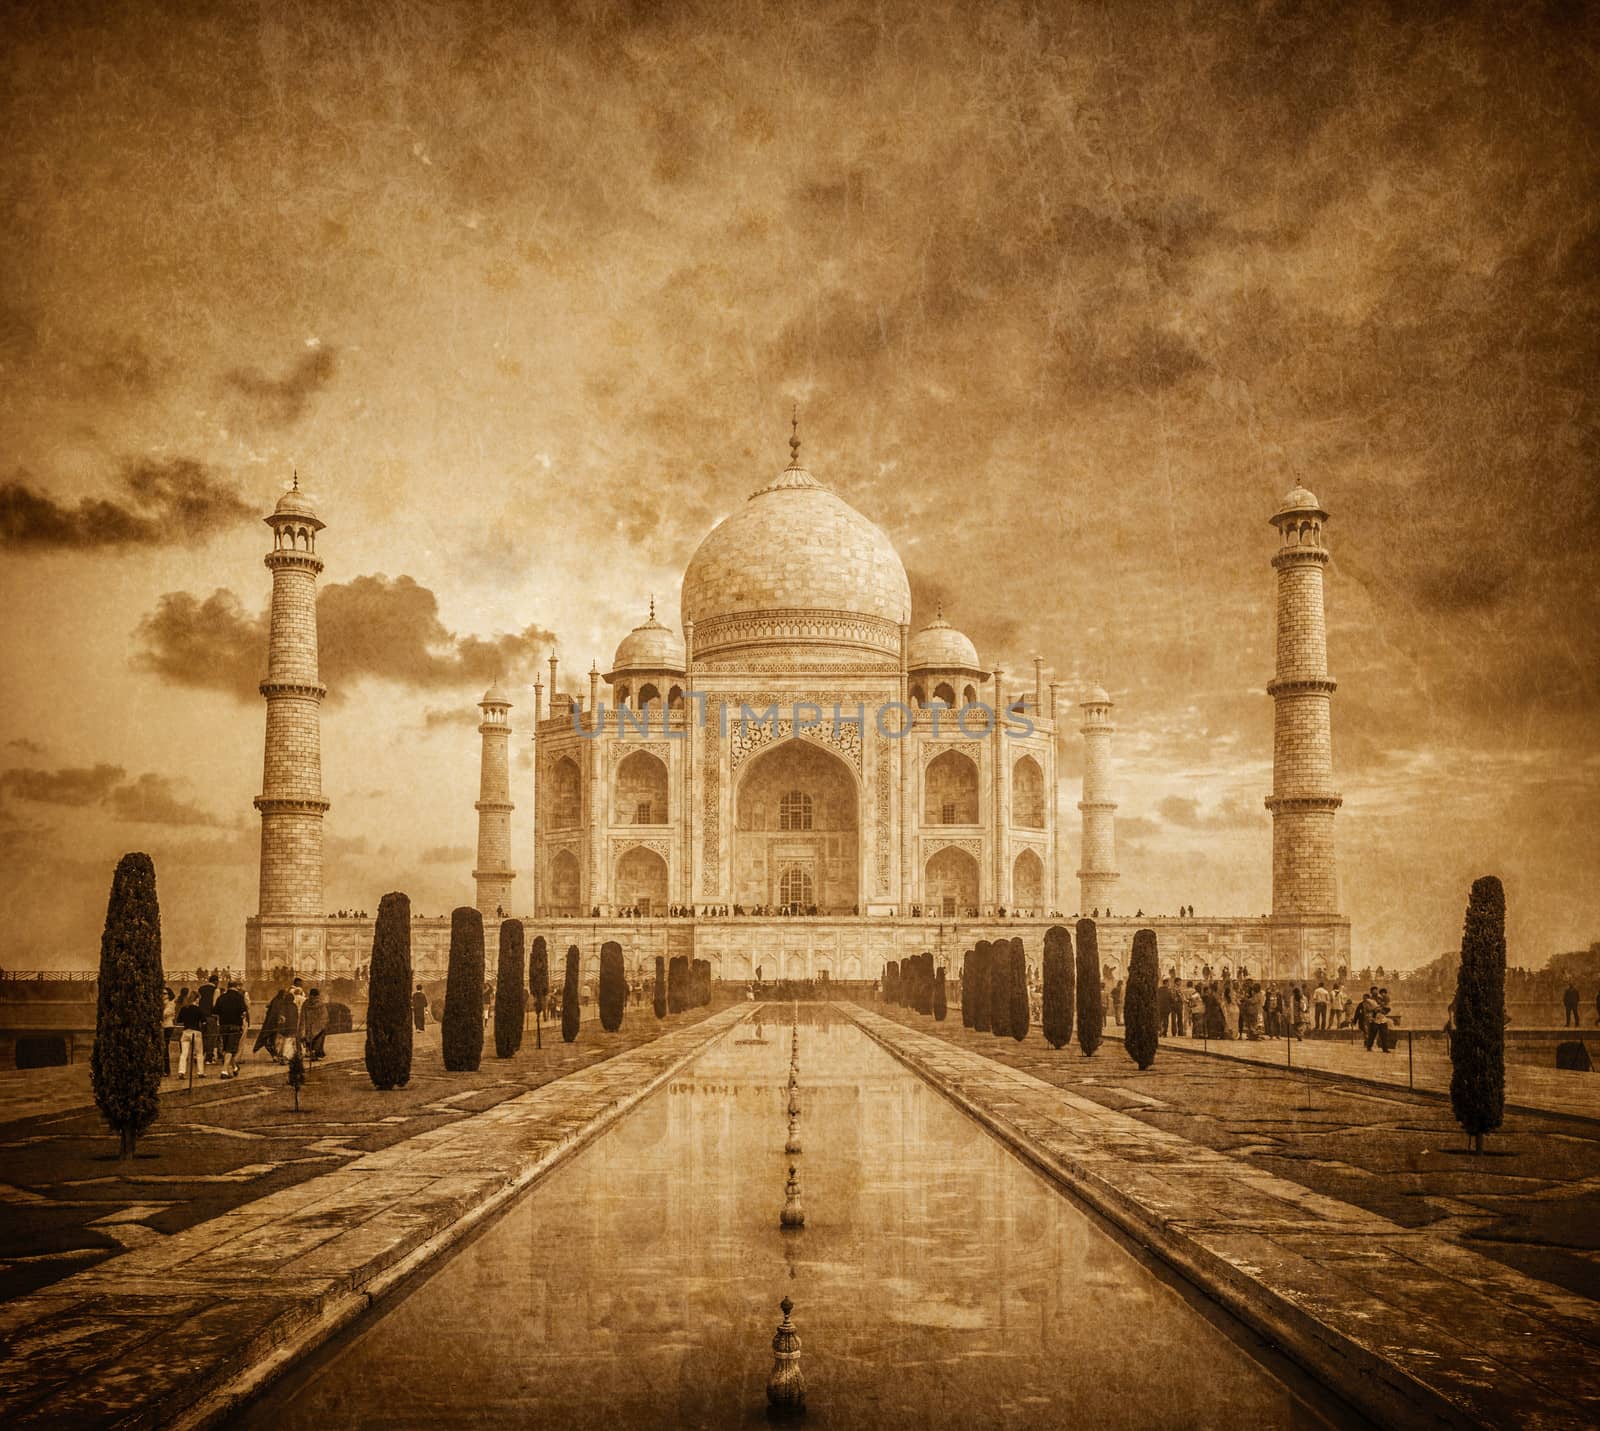 Taj Mahal vintage image, Agra, India by dimol